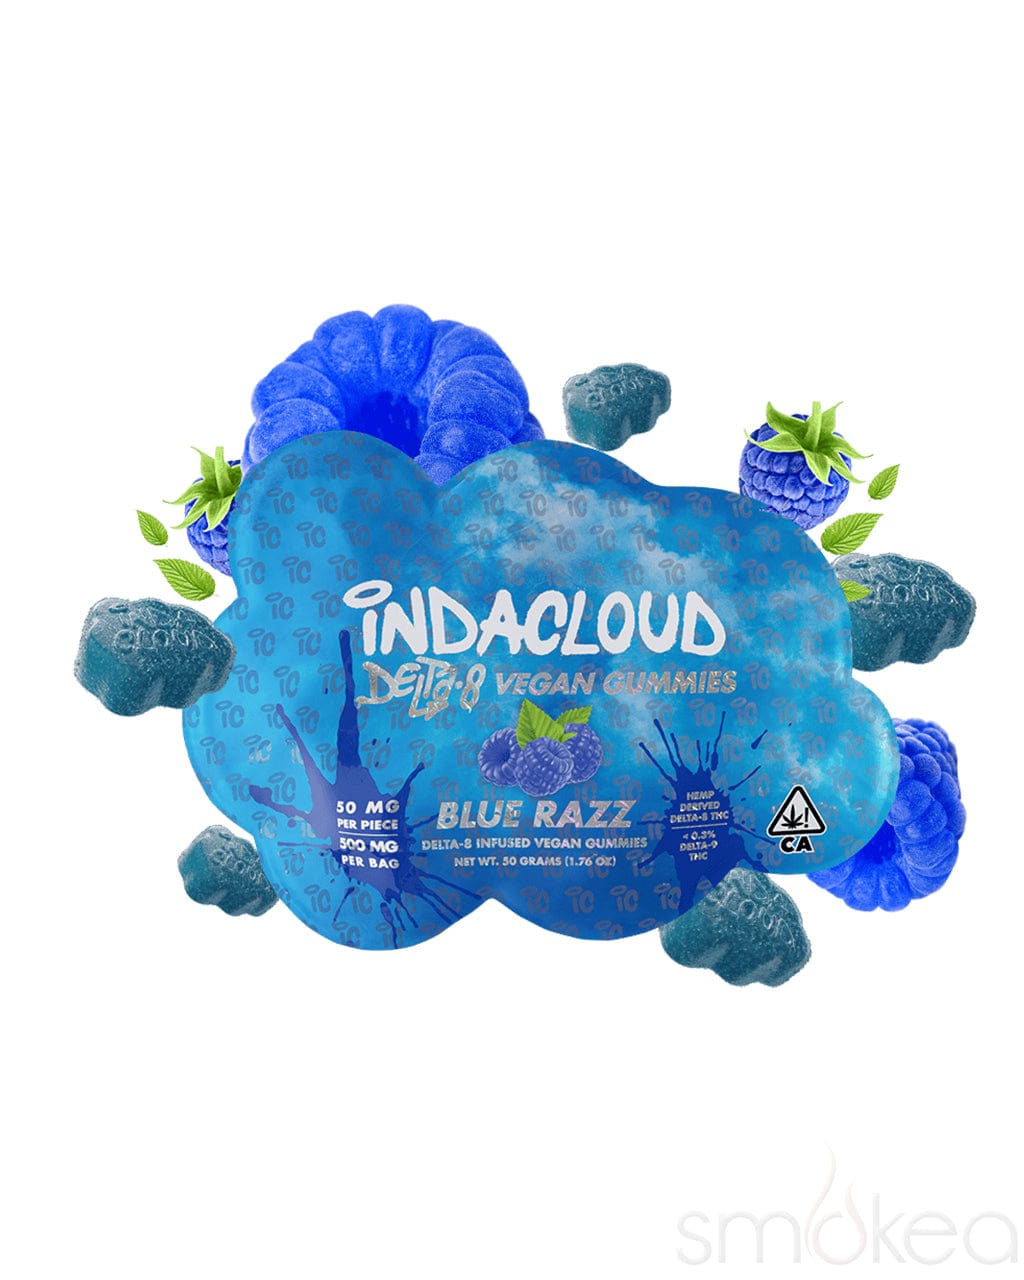 Indacloud 500mg Delta 8 Vegan Gummies - Blue Razz